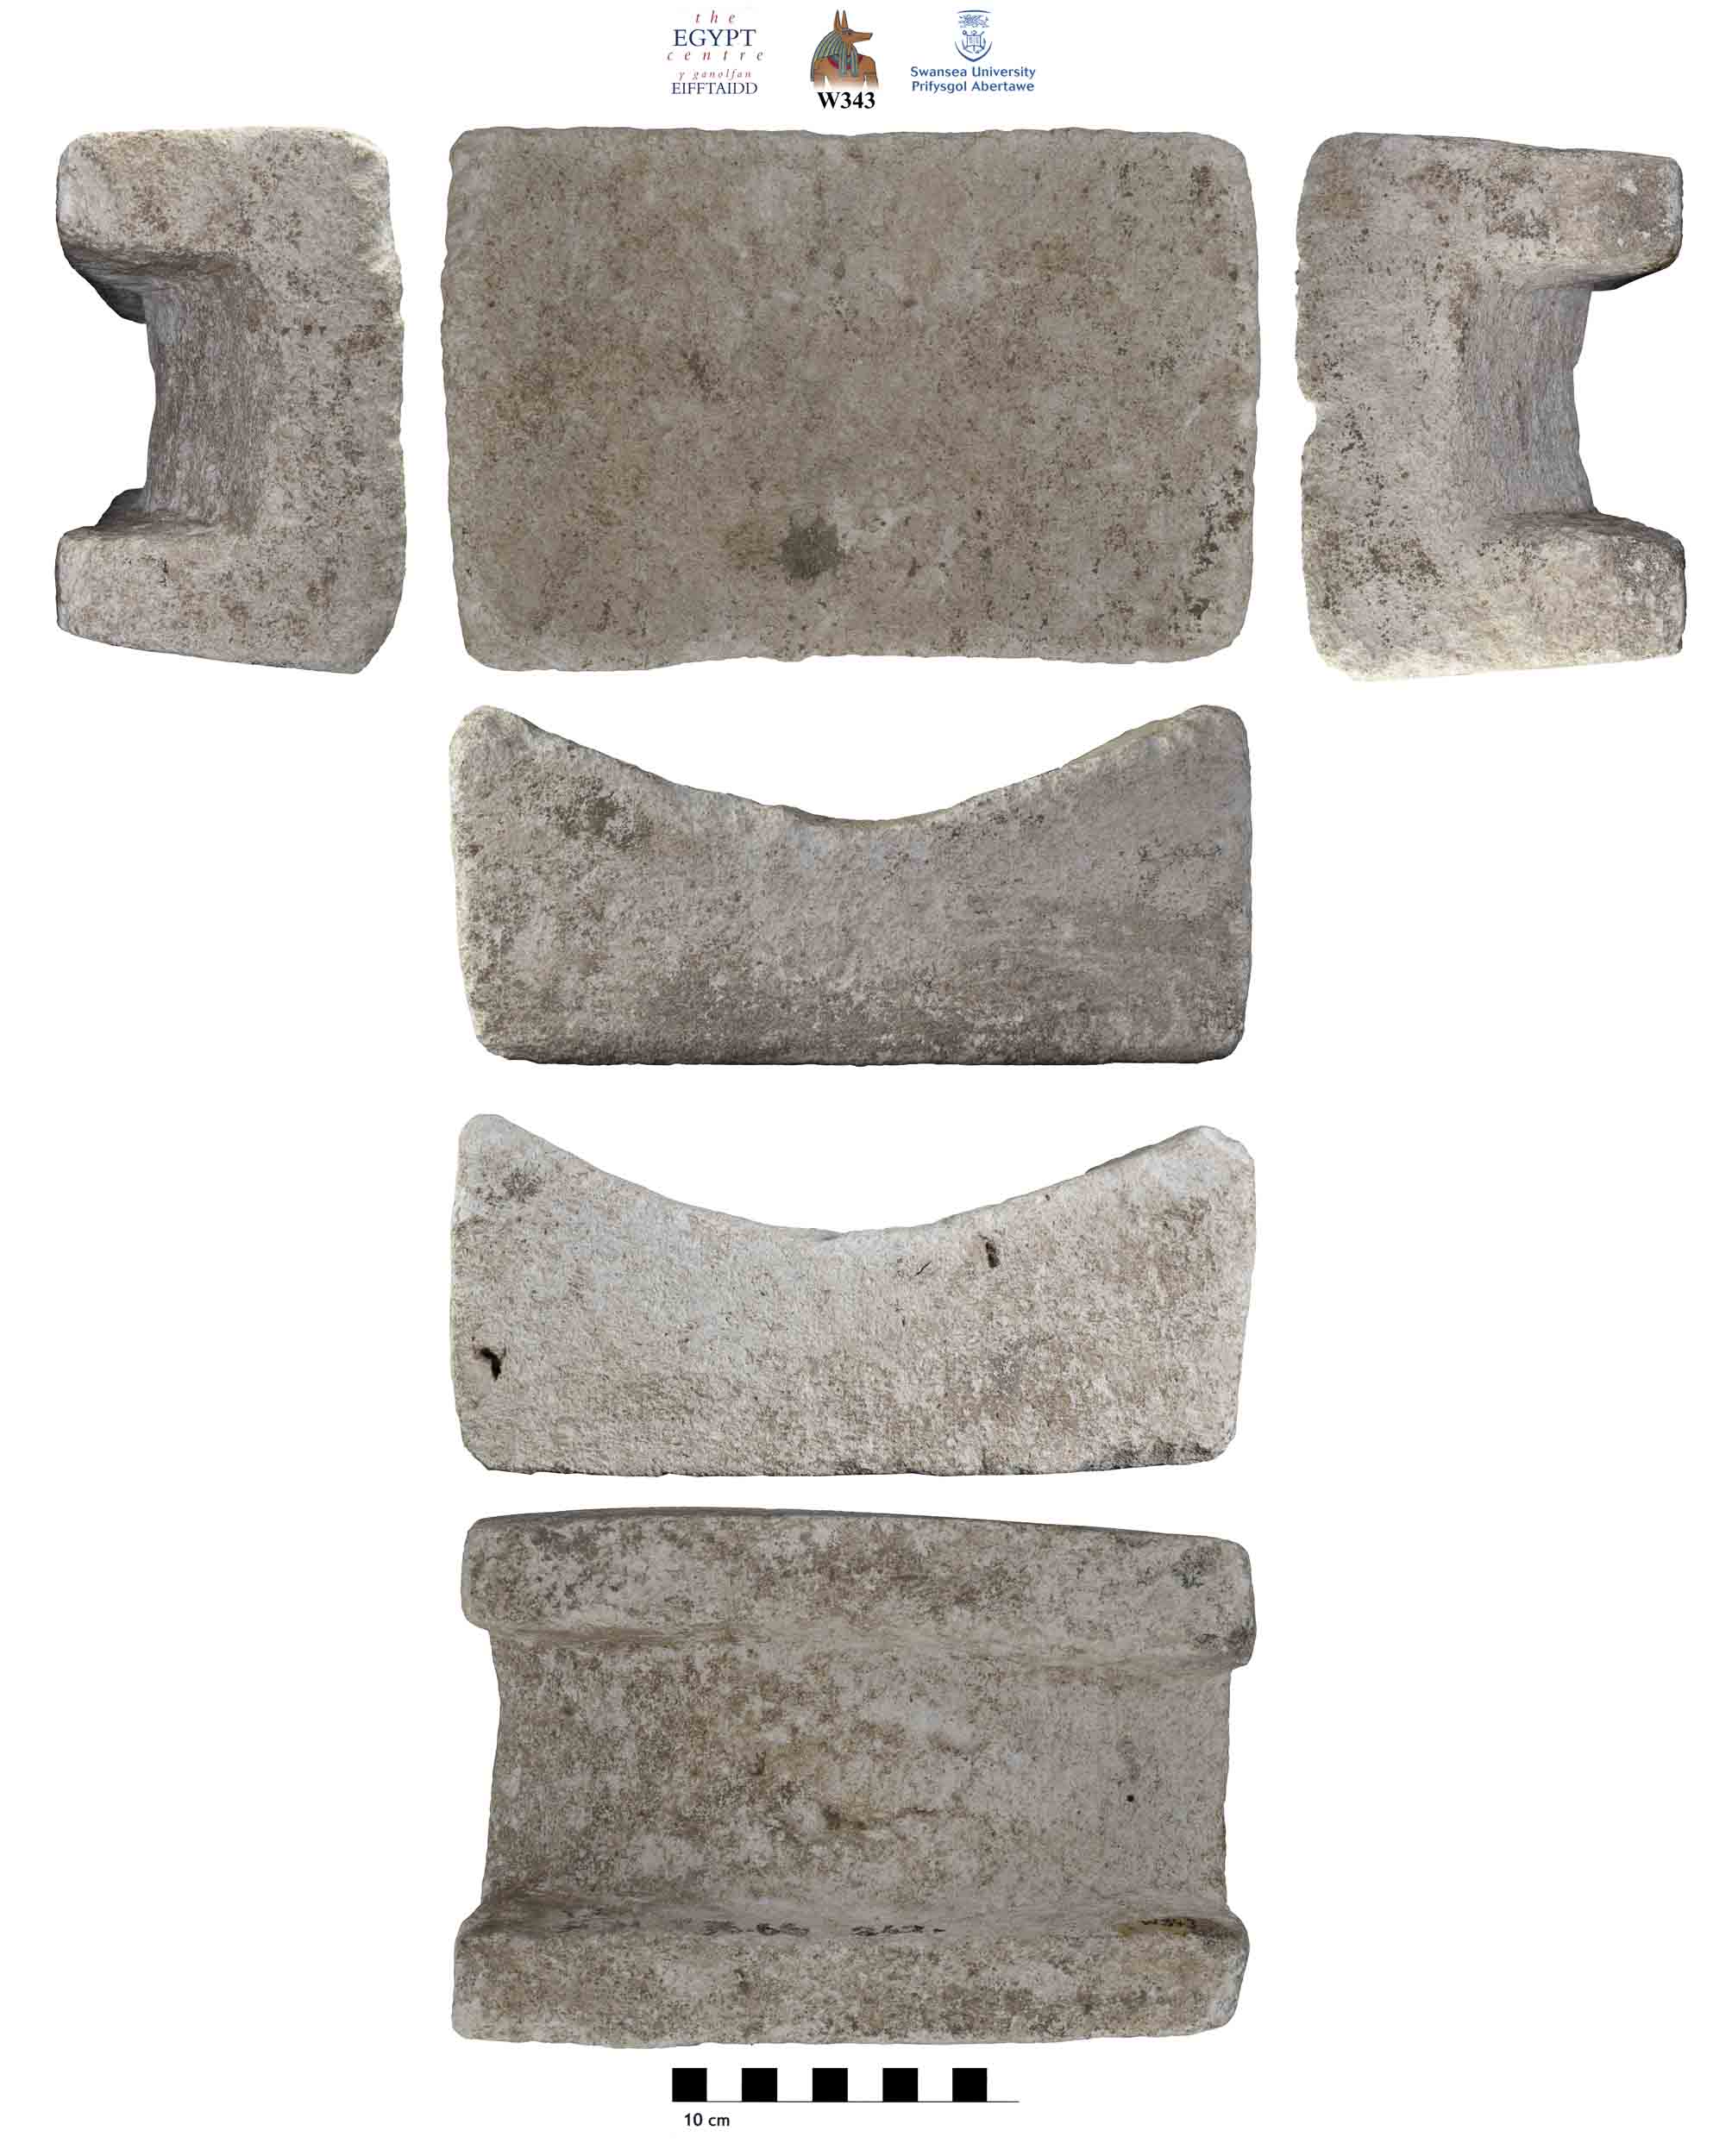 Image for: Stone stool